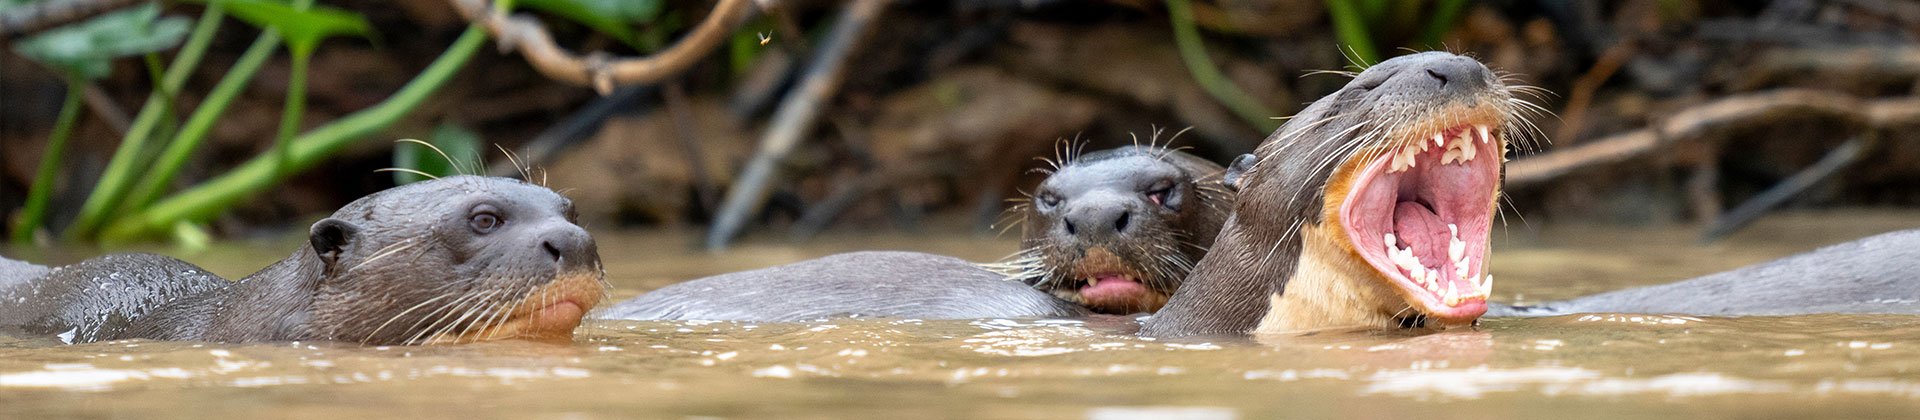 Giant river otters, Ecuador